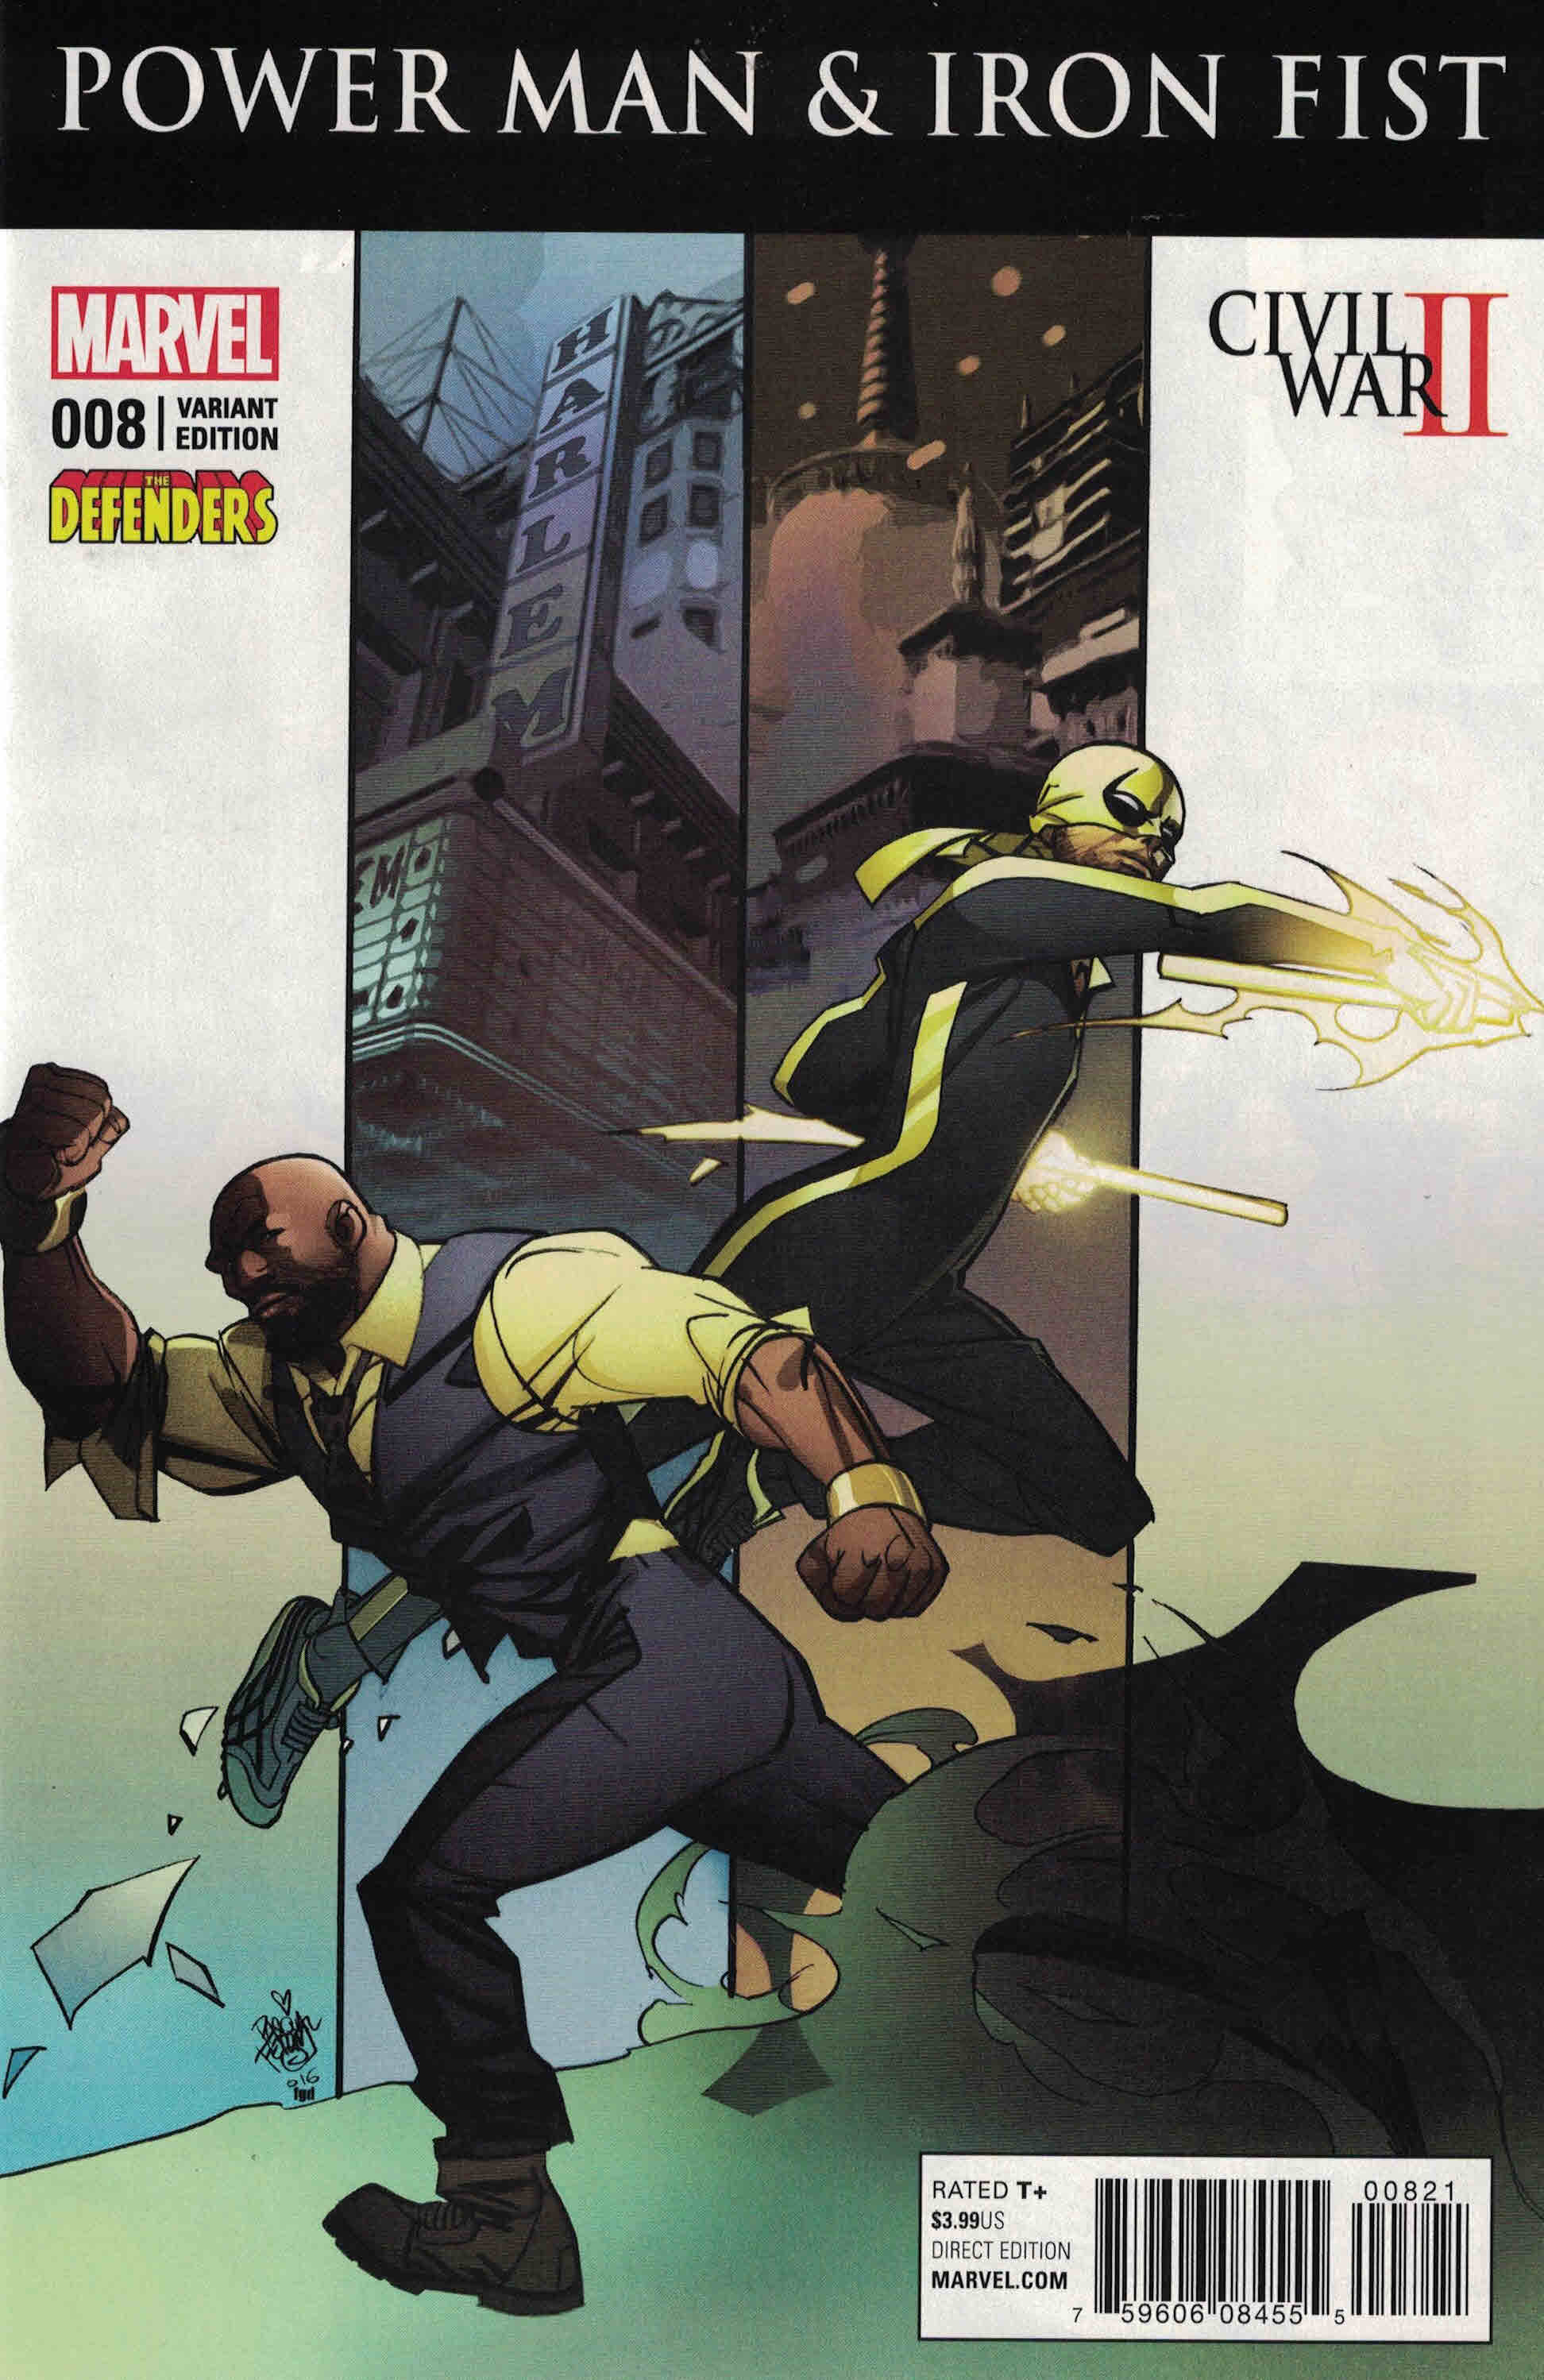 Iron Fist, Marvel's The Defenders